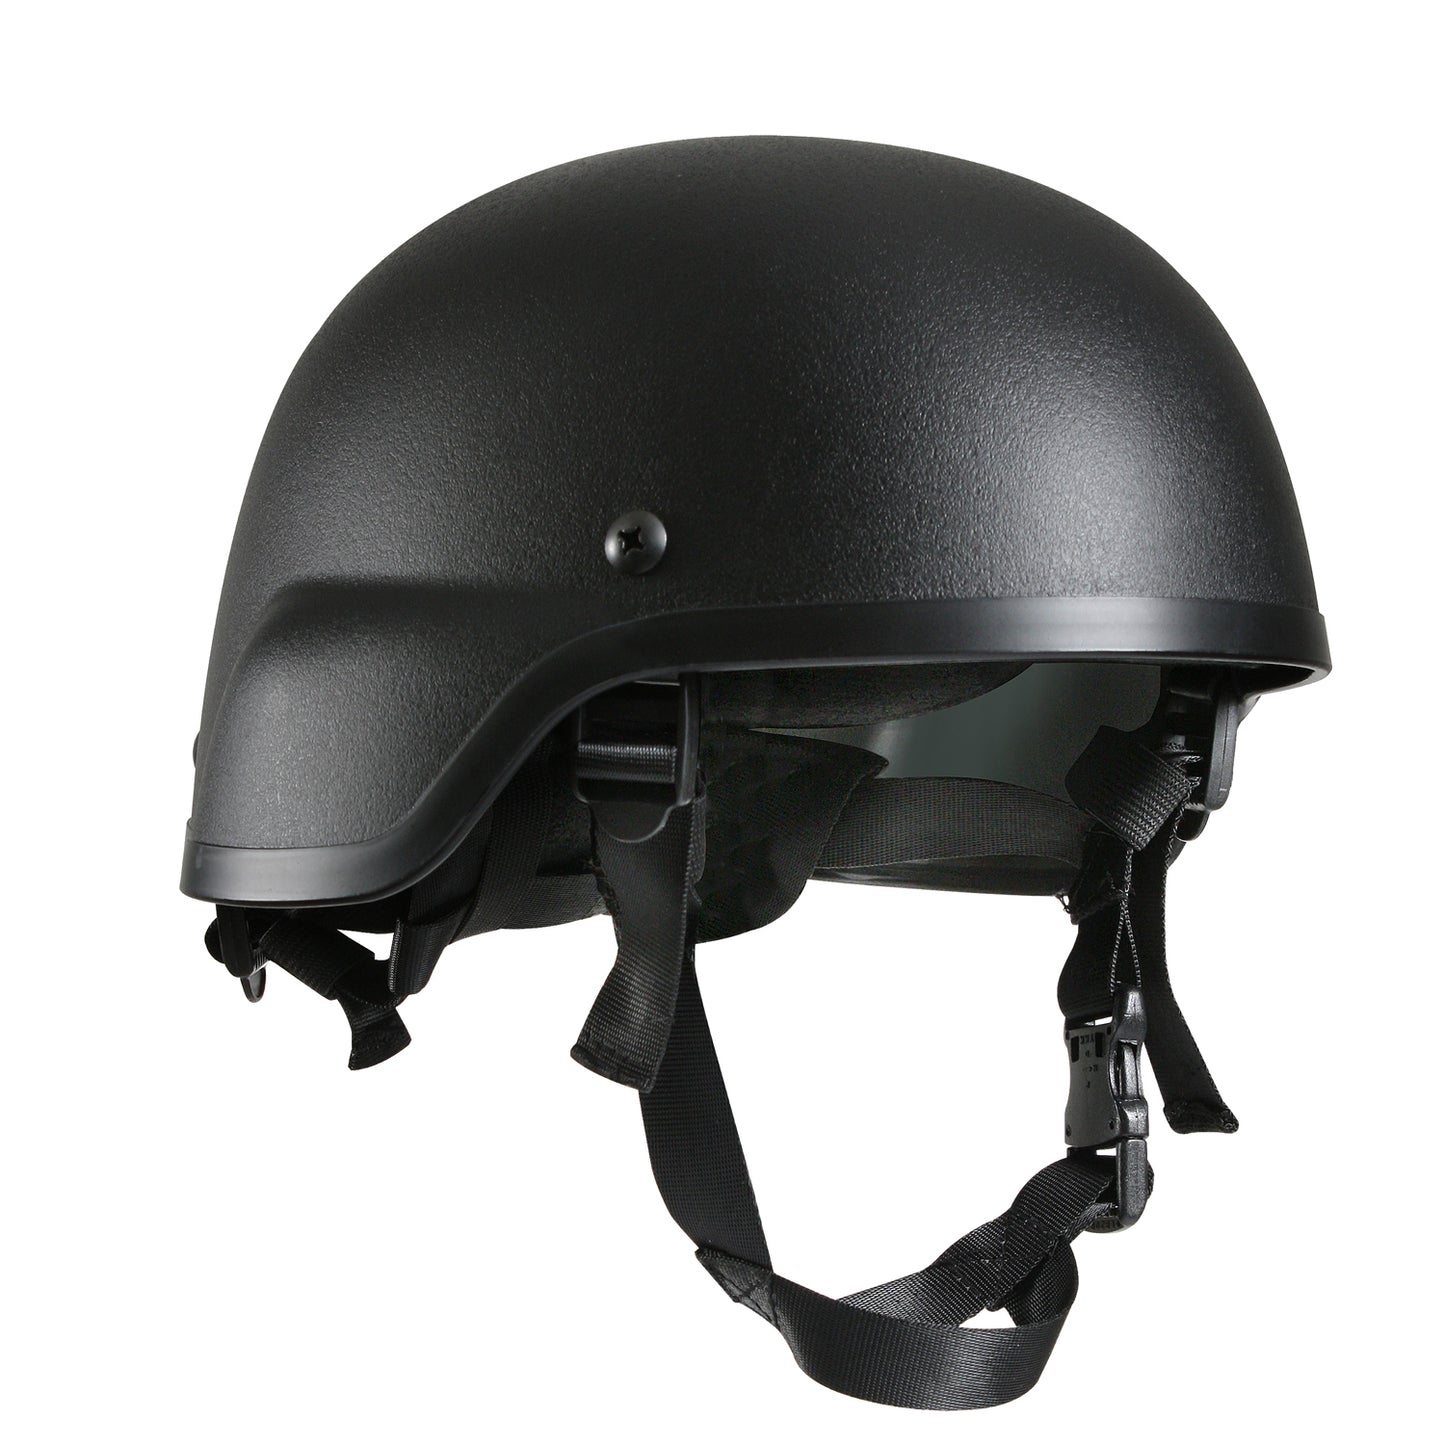 Rothco ABS MICH-2000 軍事風格戰術頭盔